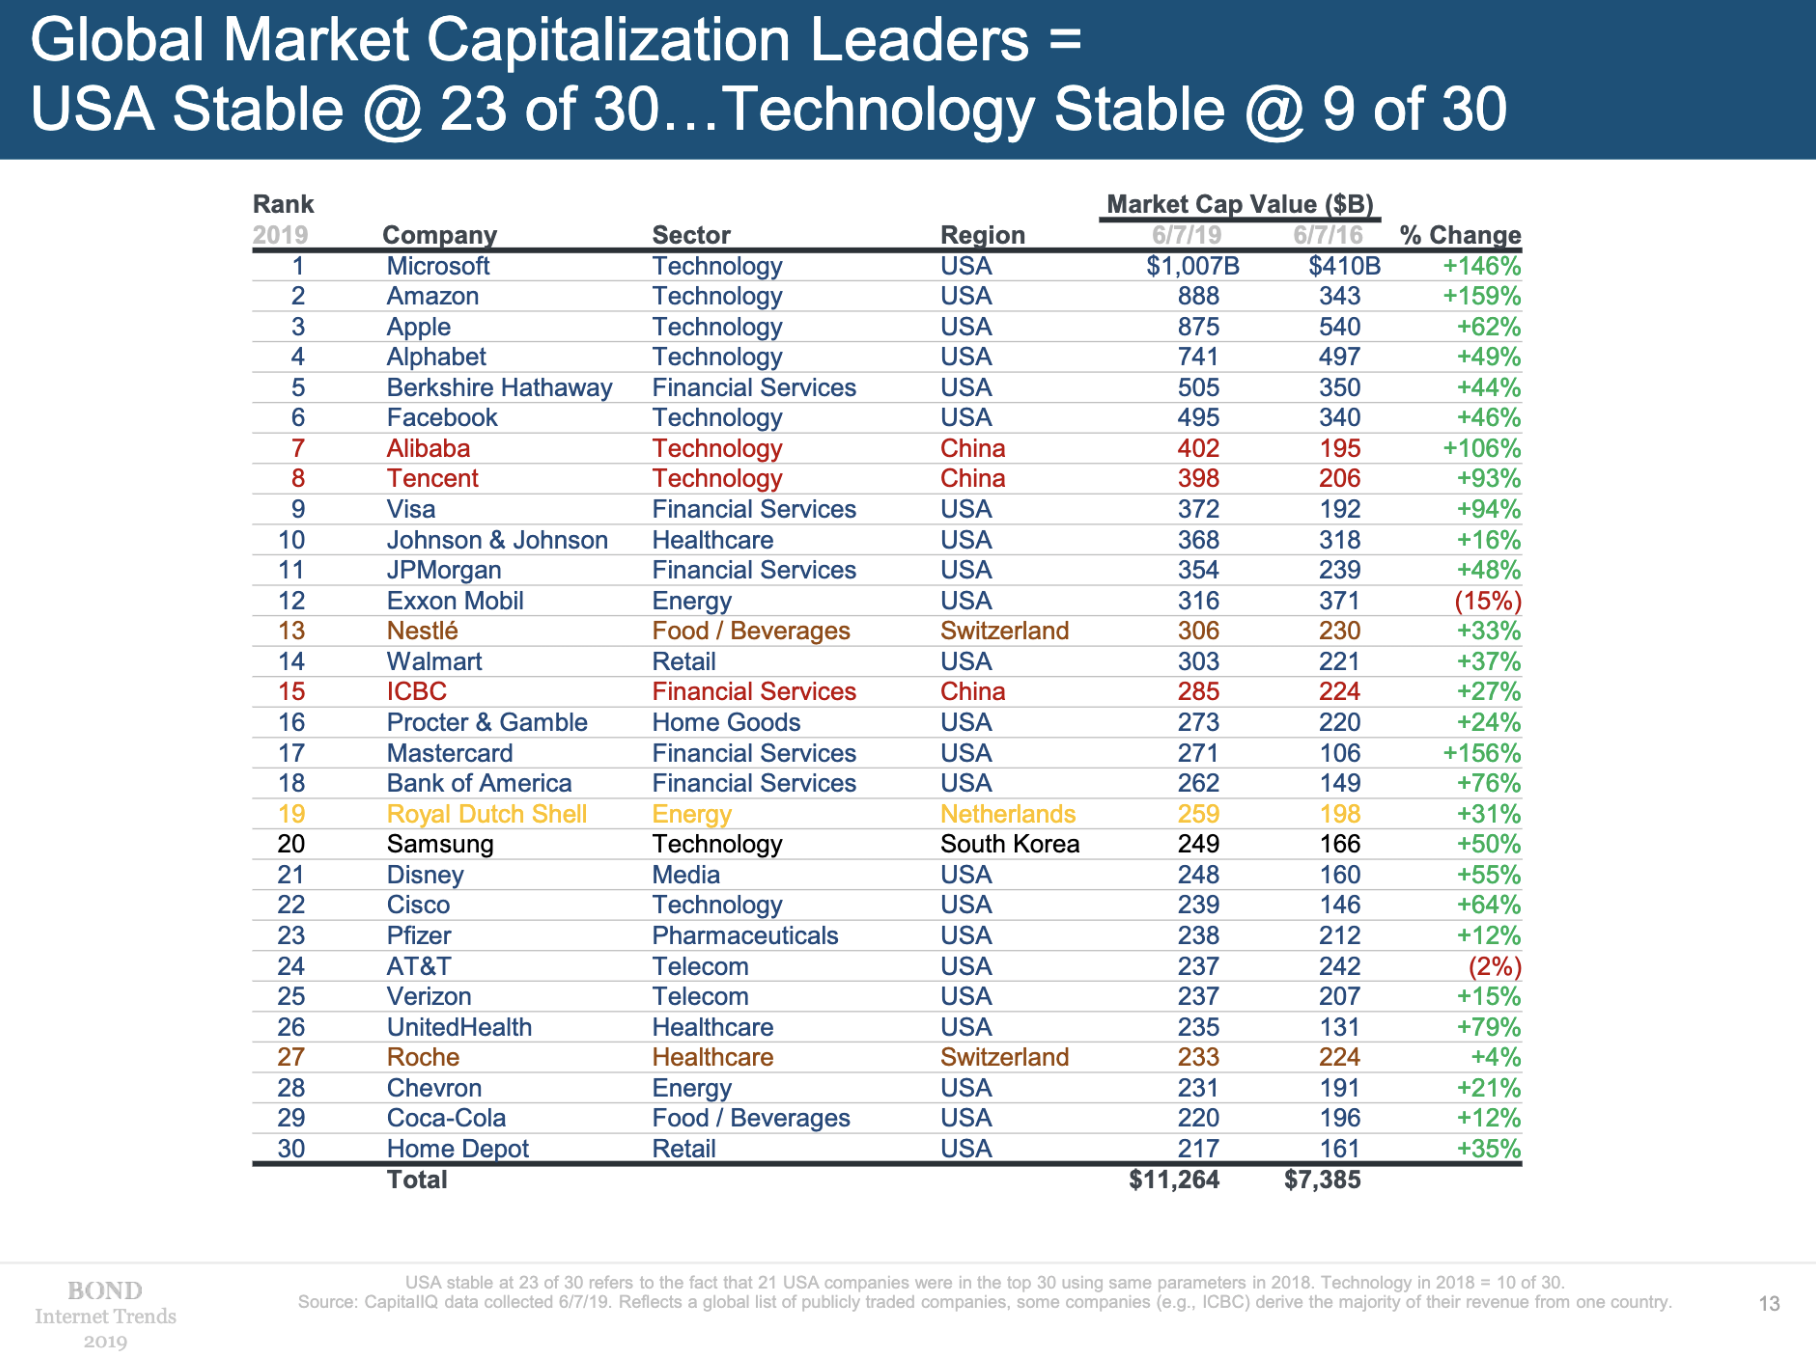 Global Market Cap leaders